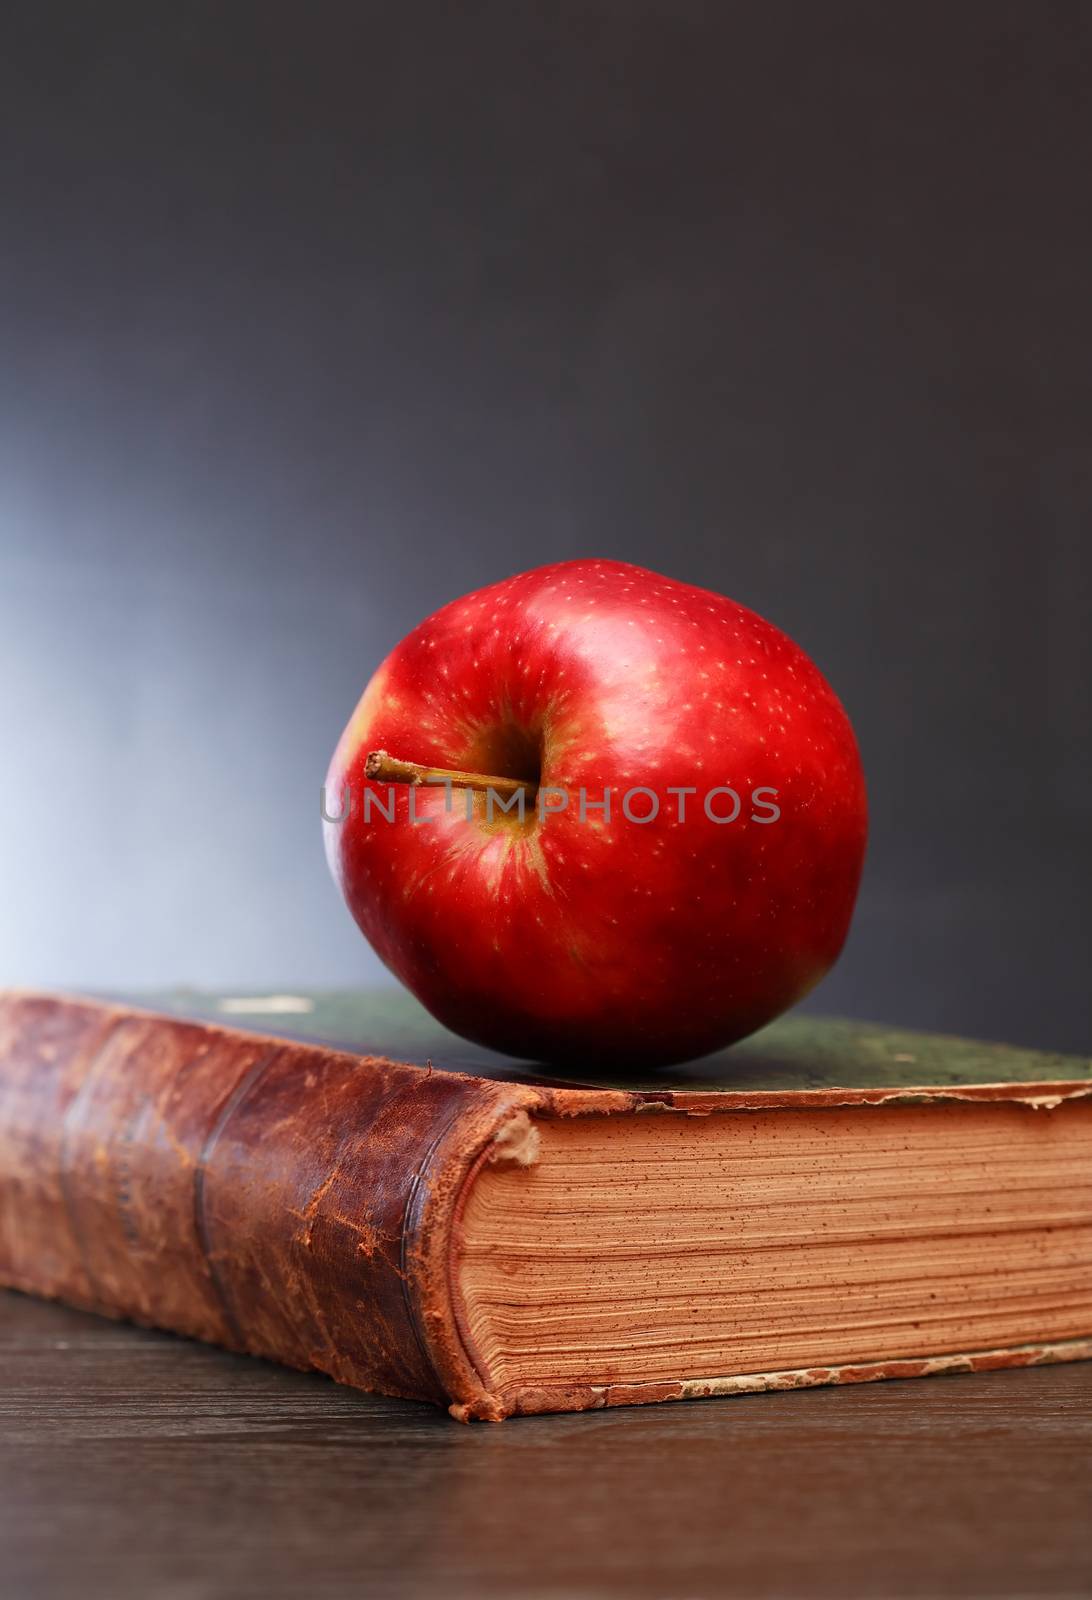 Freshness red apple on old book against dark background